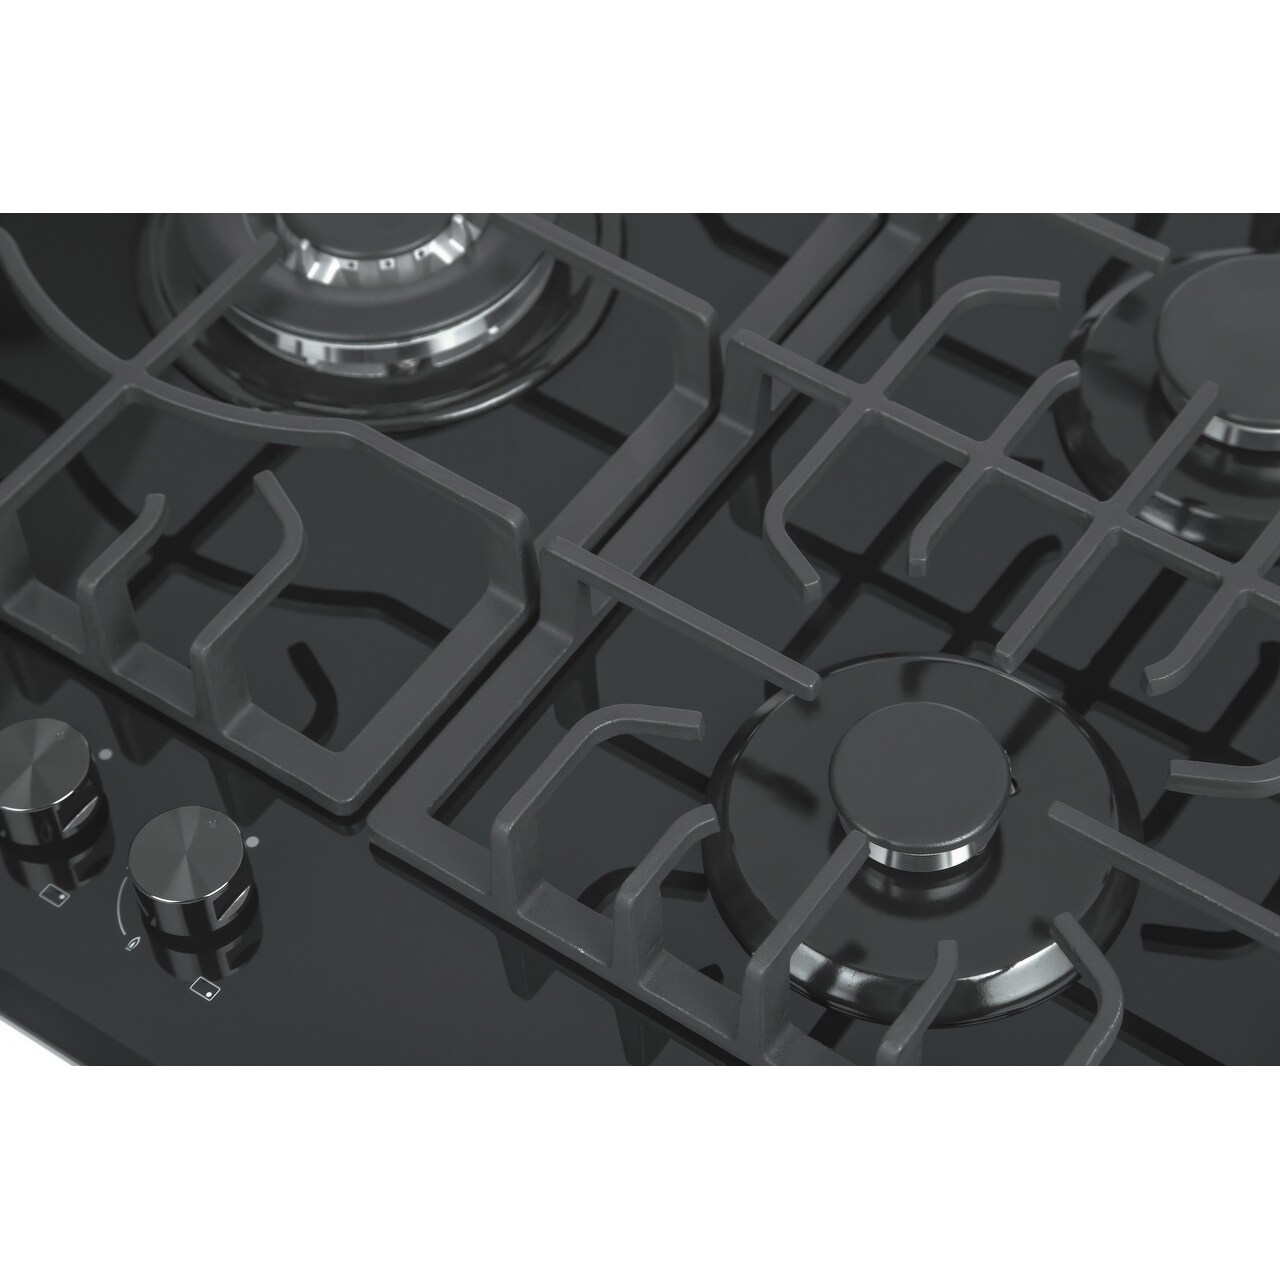 Empava 36 5 Italy Sabaf Sealed Burners GAS Stove Top Cooktop Black Tempered Glass LPG/NG Convertible EMPV-36GC905